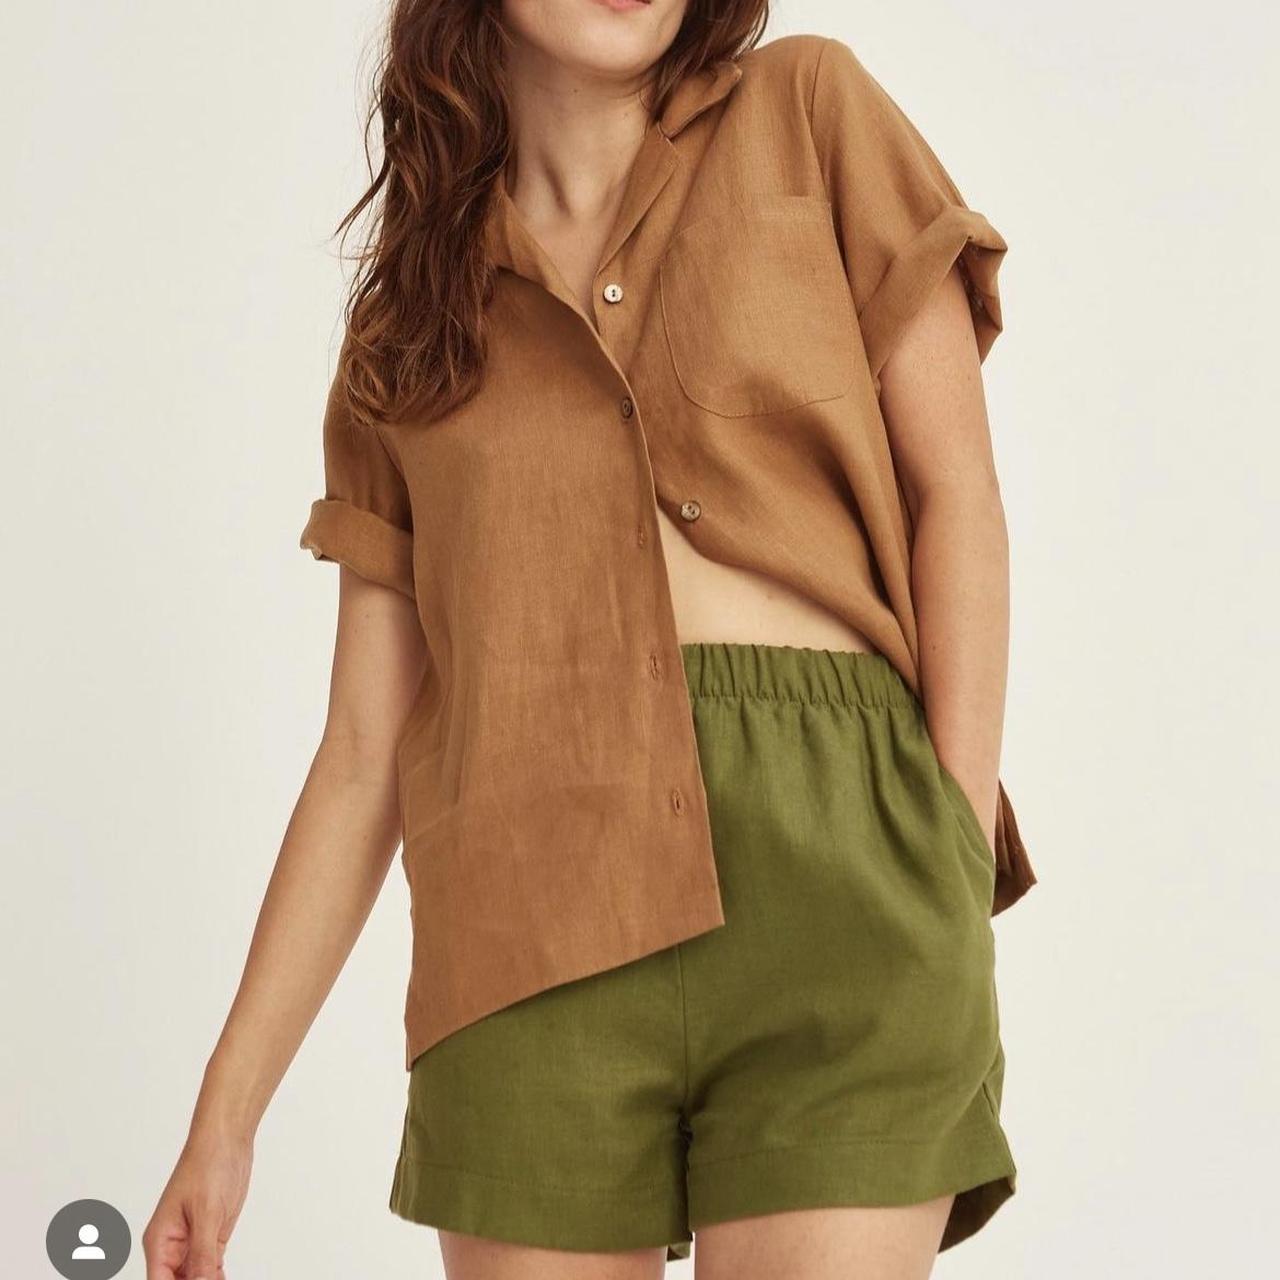 Lykke Wullf Women's Brown and Tan Shirt (2)